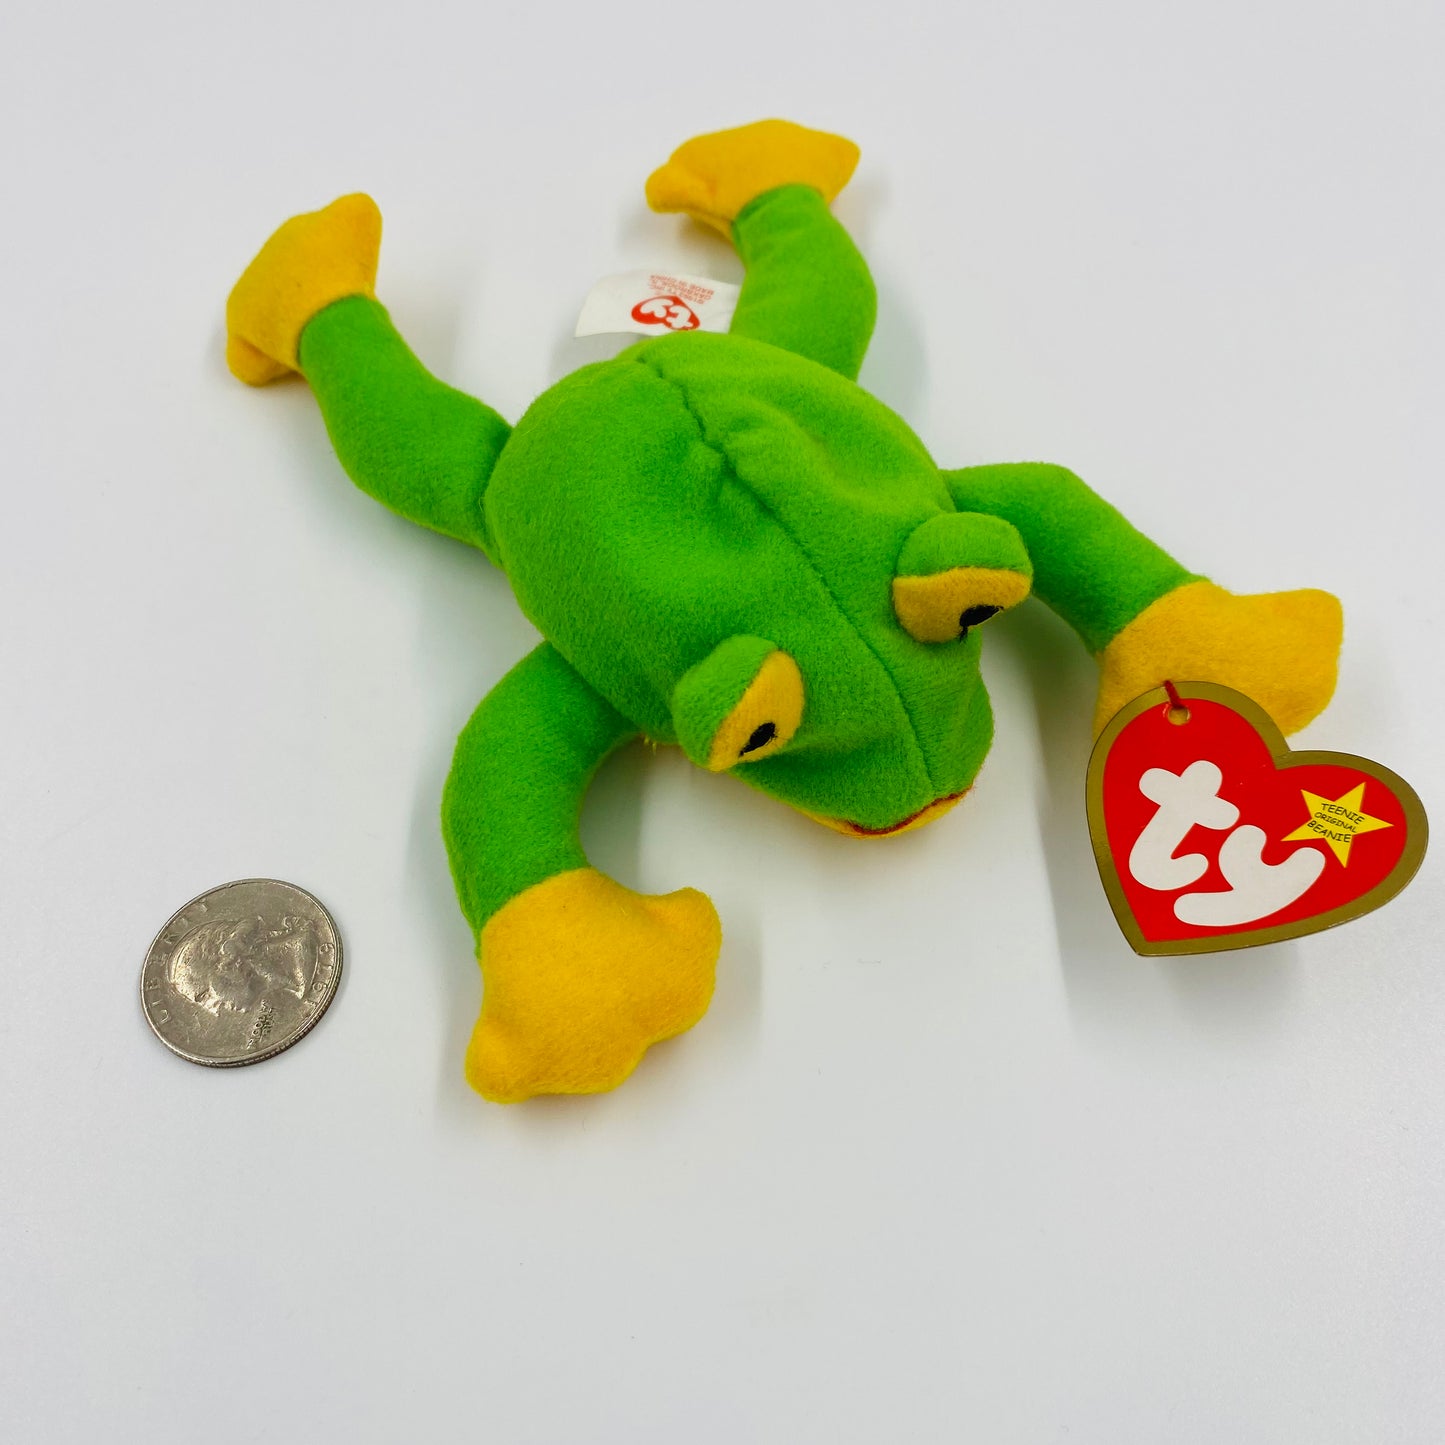 Teenie Beanie Babies Smoochy the Frog McDonald's Happy Meal bean bag plush toy animal (1999) loose